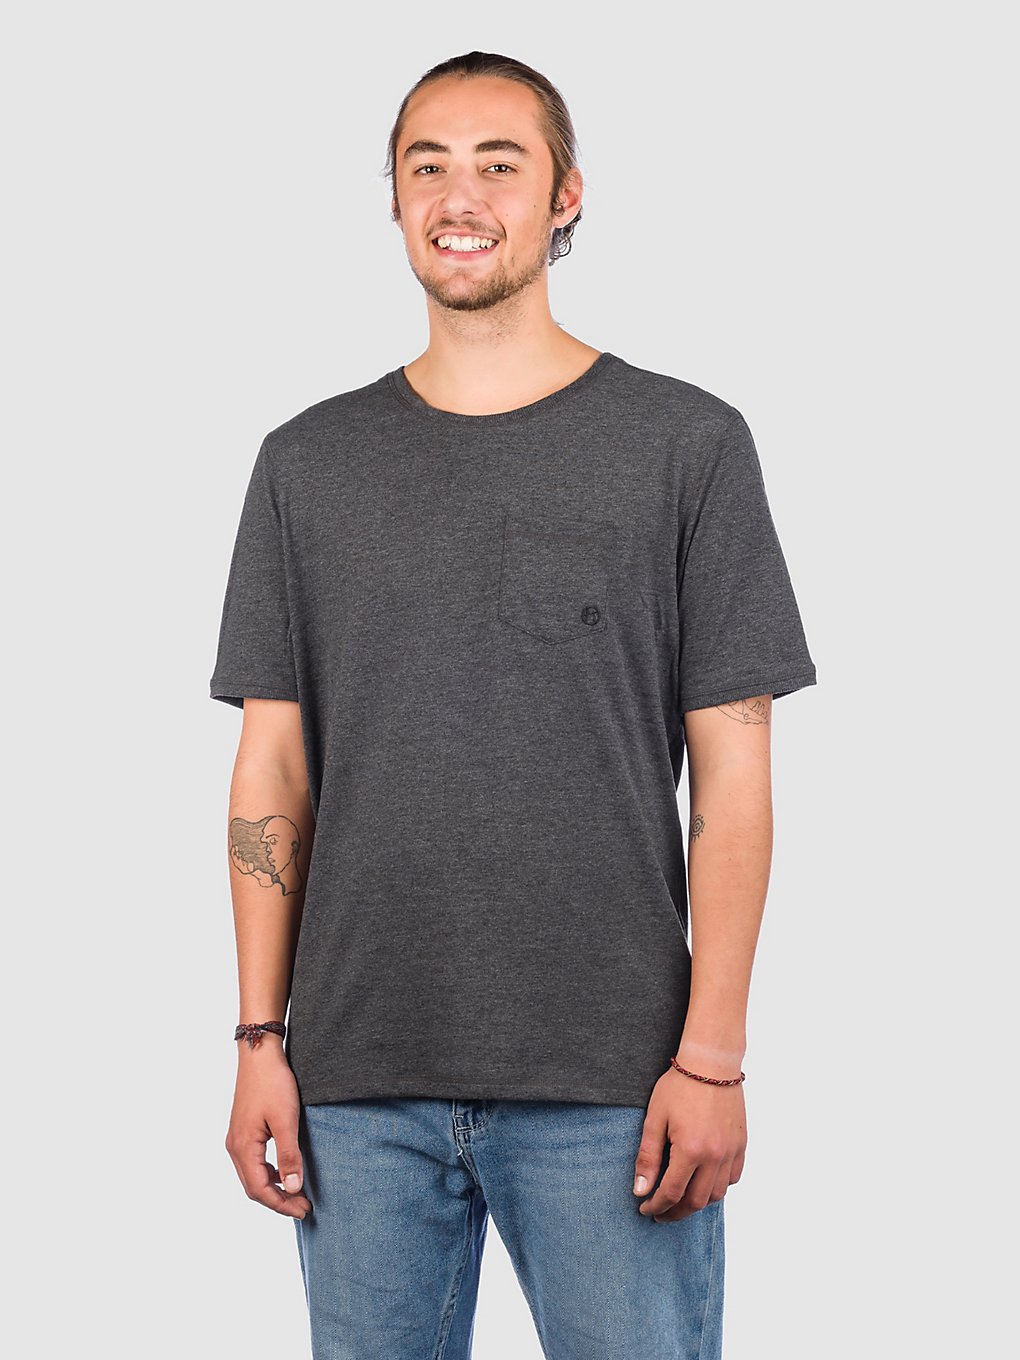 Kazane Moss T-Shirt charcoal heather kaufen